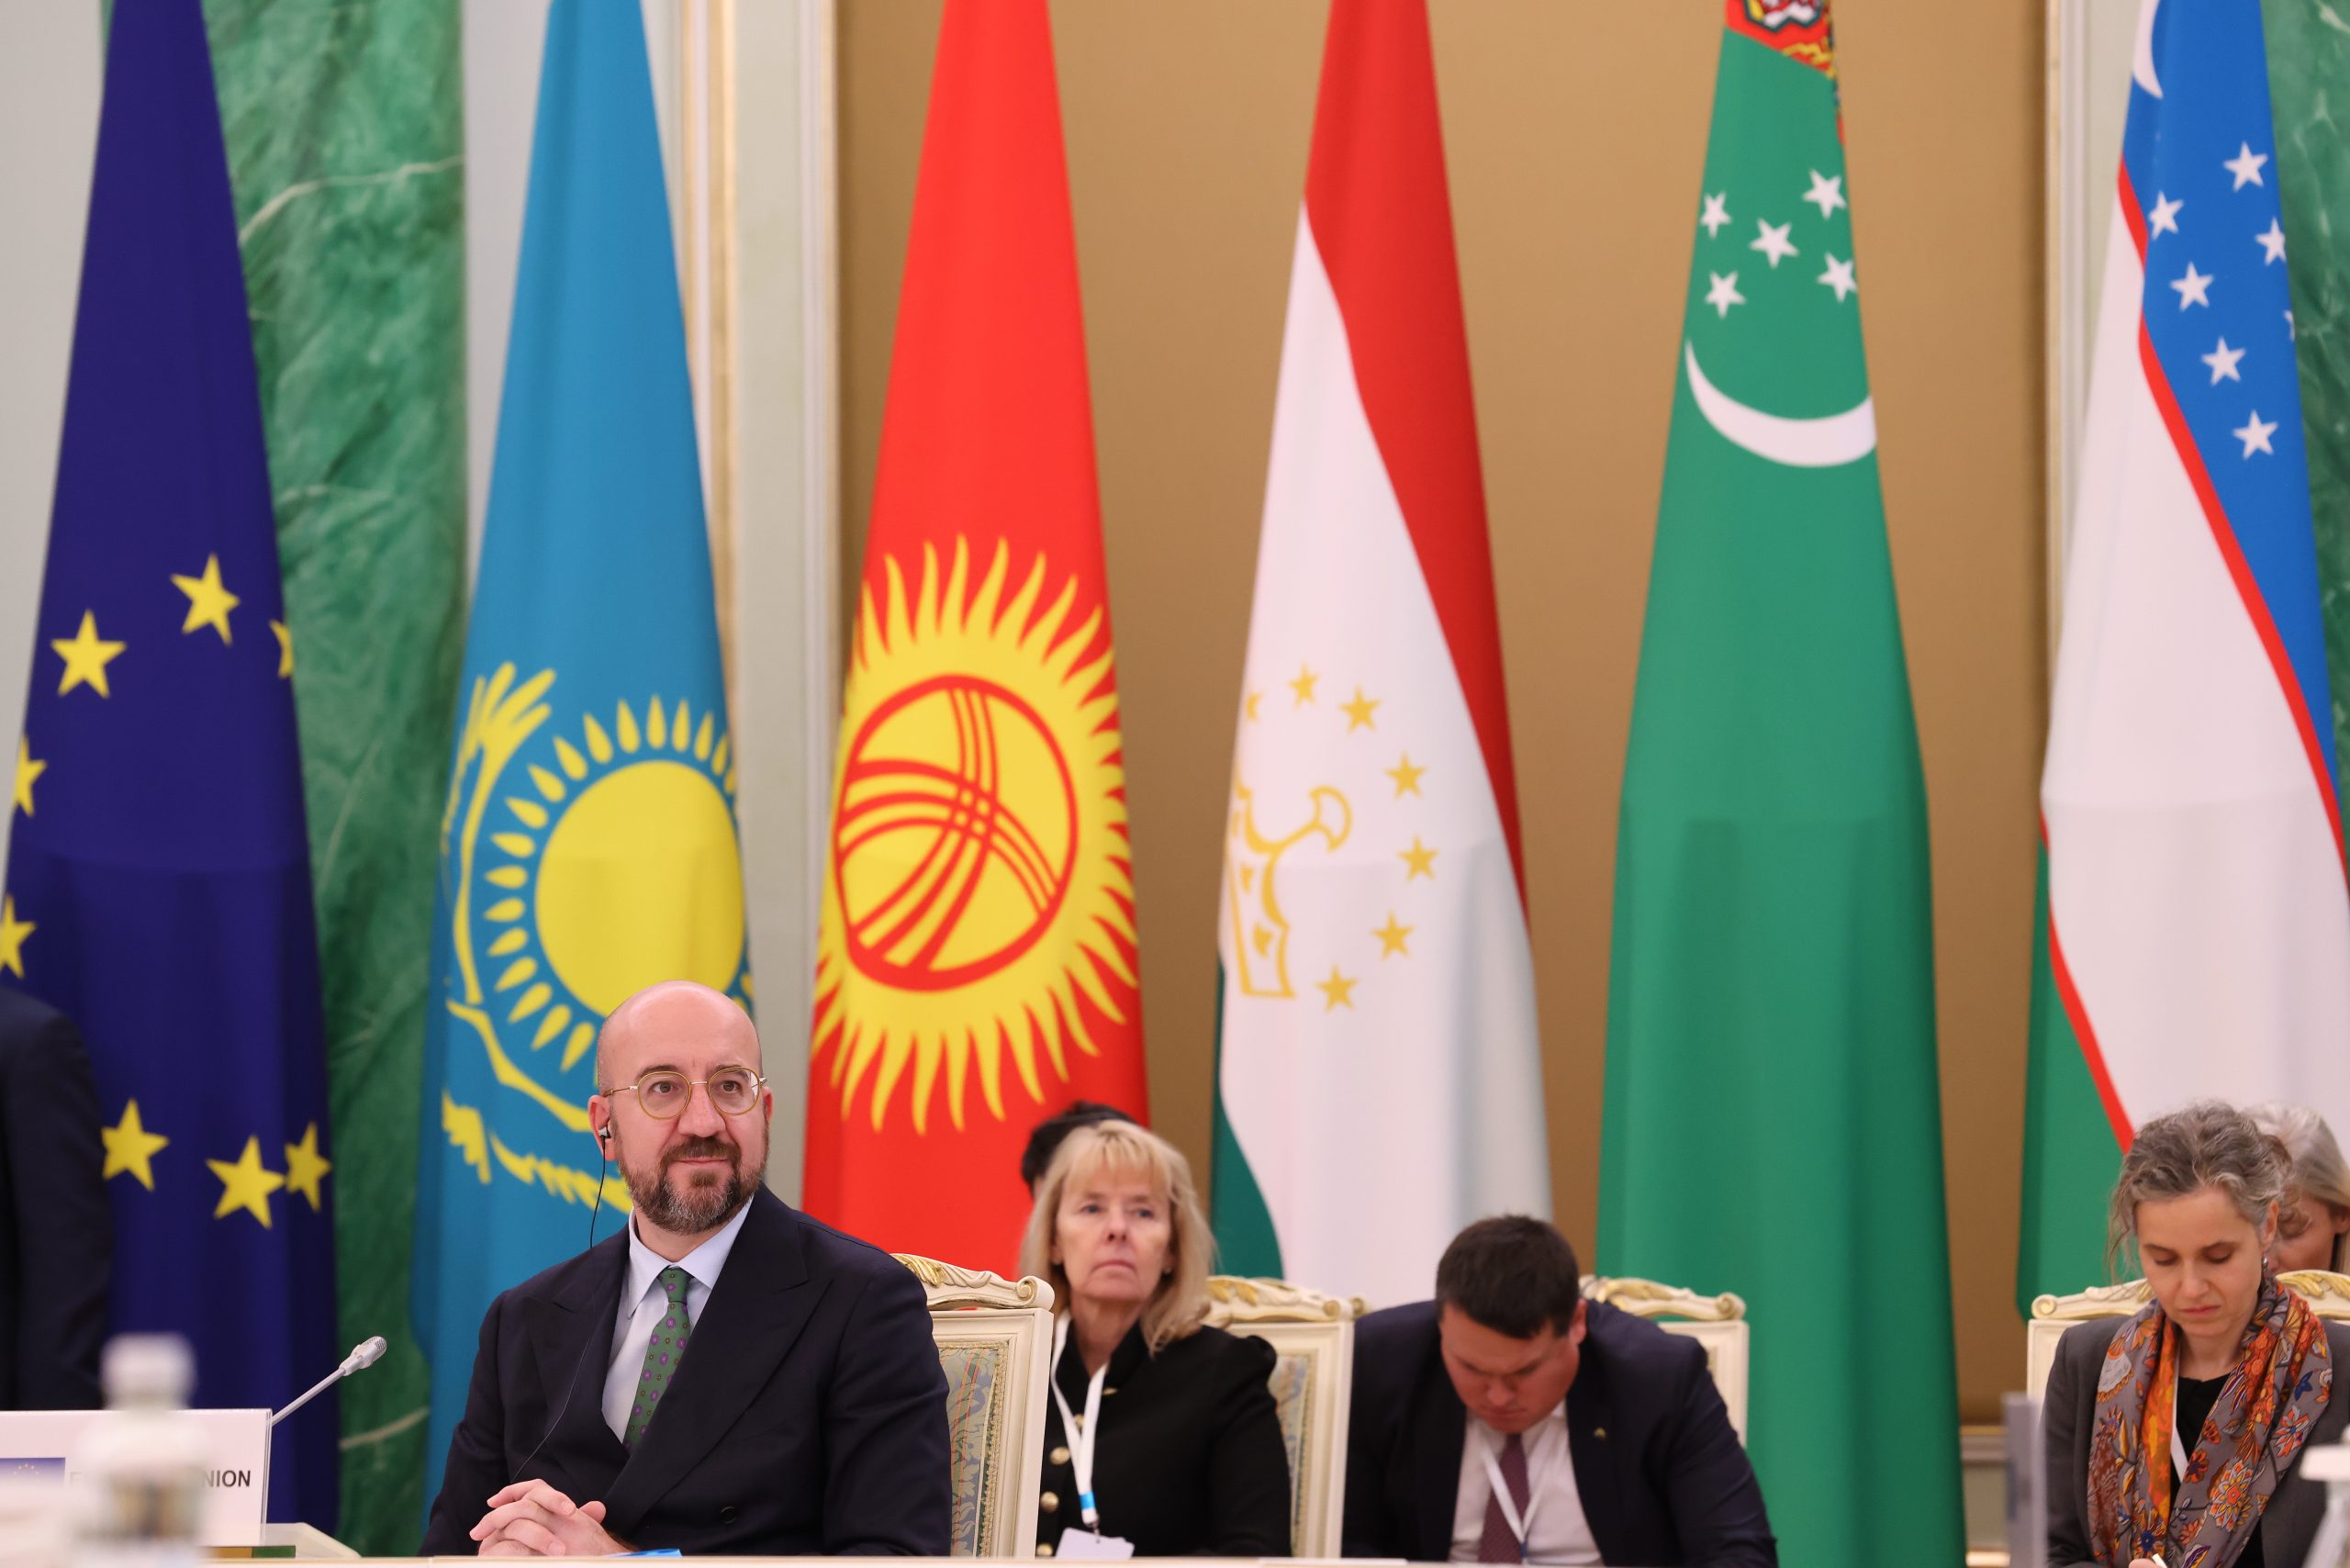 Photo: President Michel visits Kazakhstan President Michel attends the Central Asia leaders meeting. Credit: European Union Website. https://newsroom.consilium.europa.eu/permalink/p148146